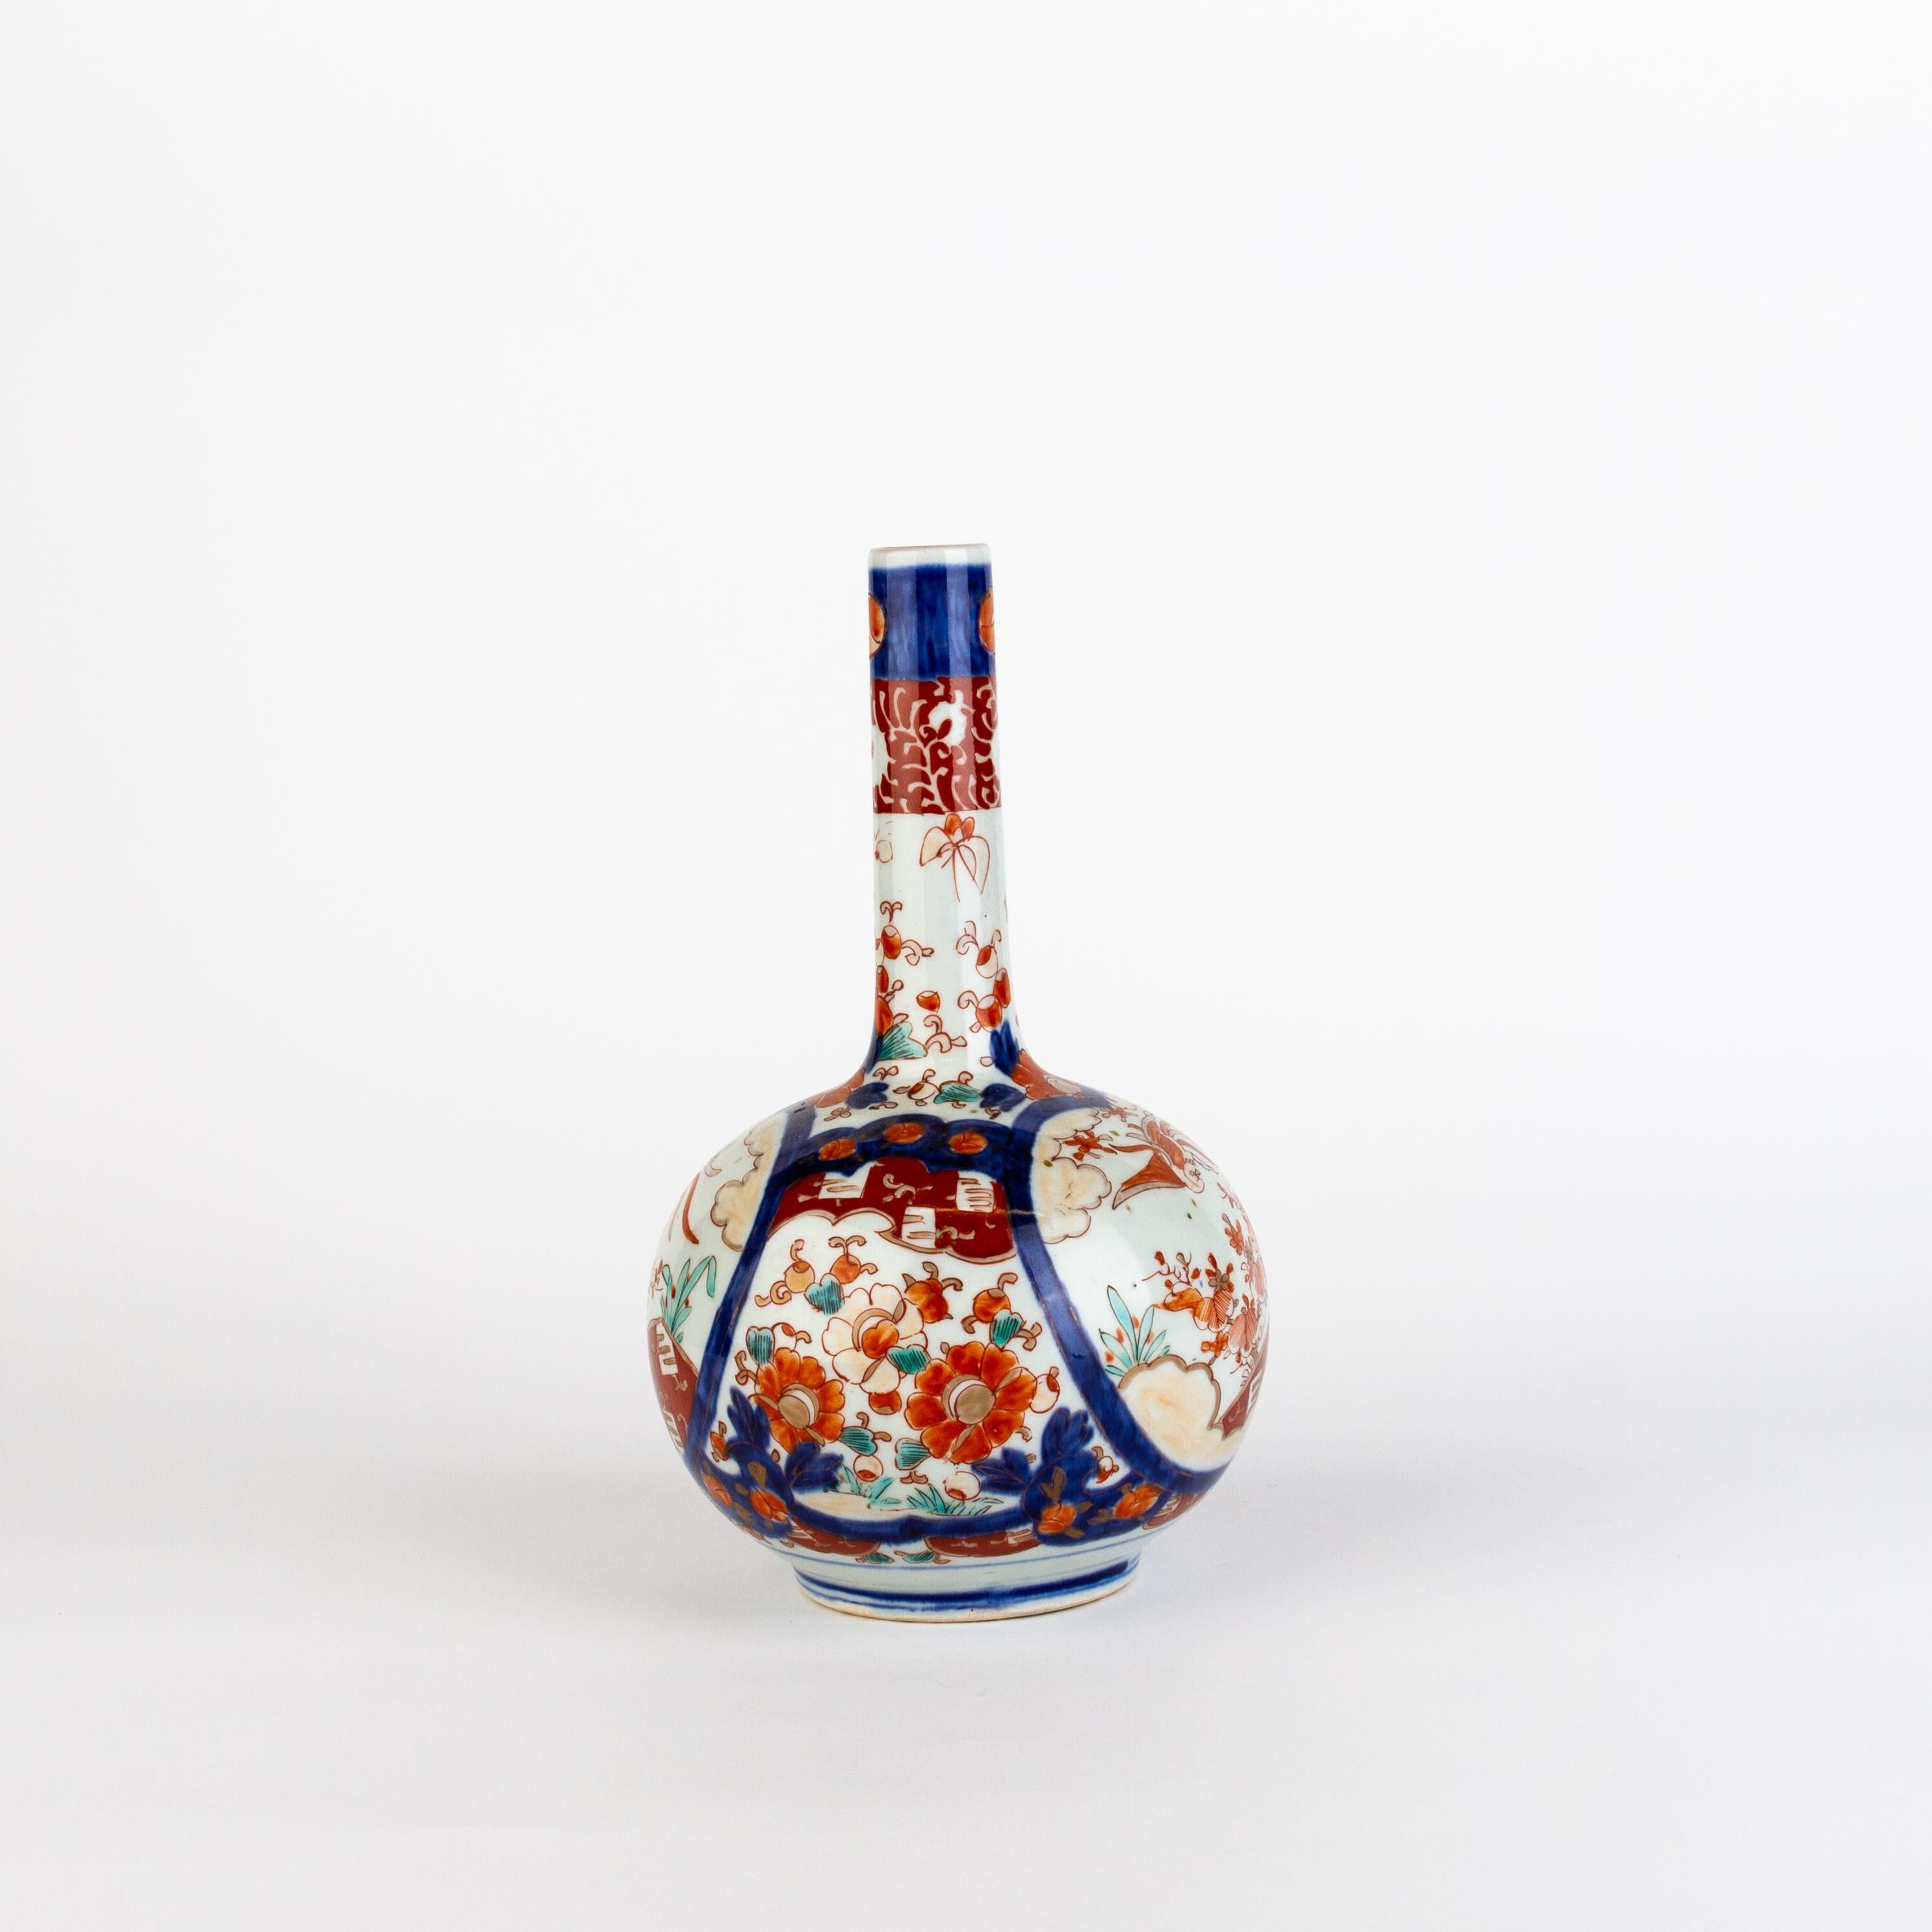 Japanese Imari Porcelain Vase 19th Century Meiji 
Good condition
Free international shipping.